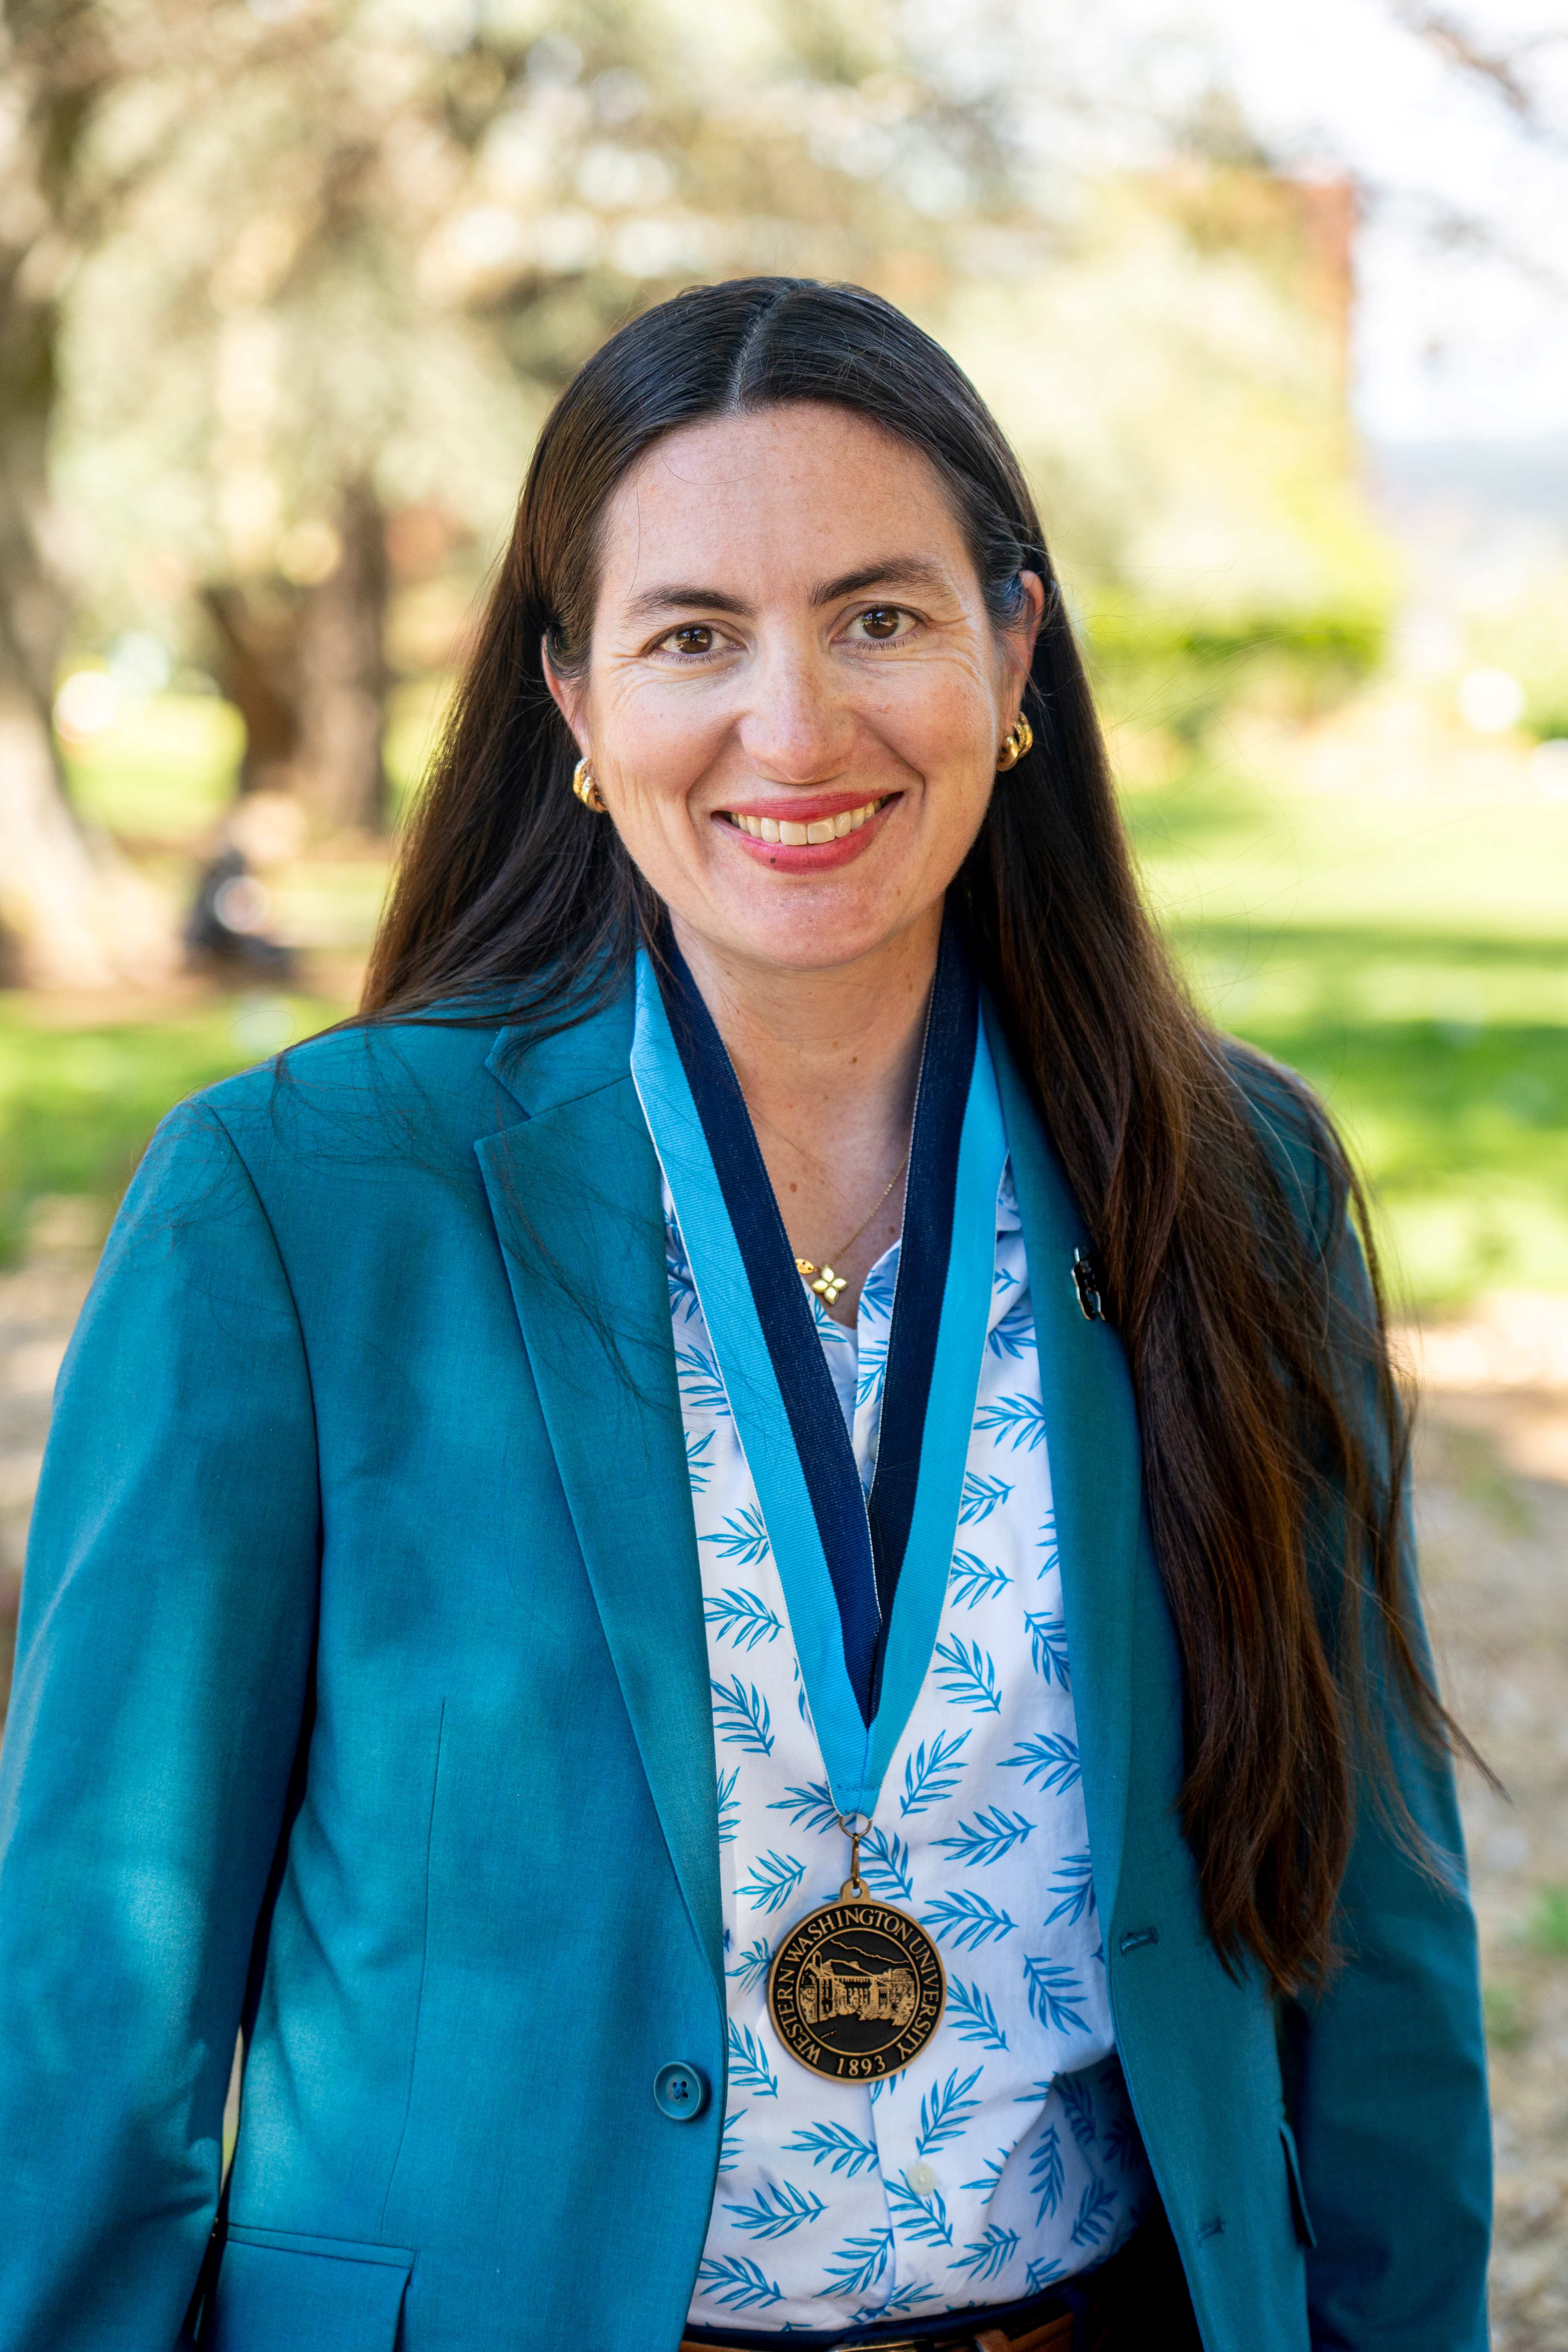 Dr. Tesla Monson wears a vibrant turquoise blazer and a WWU award medallion